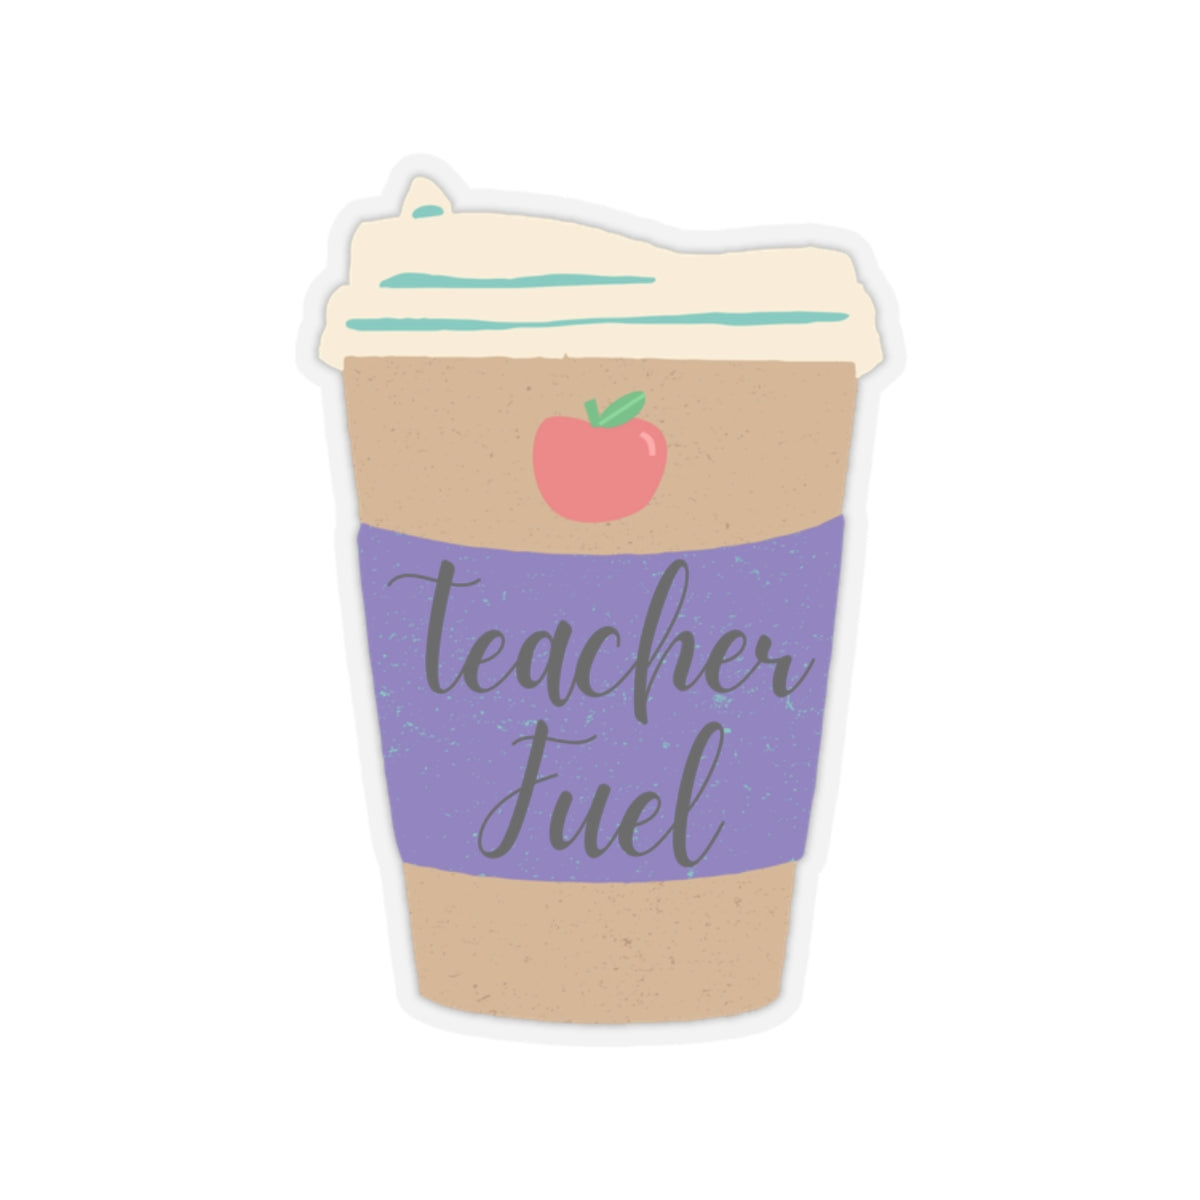 Teacher Fuel Coffee Cup Kiss-Cut Stickers